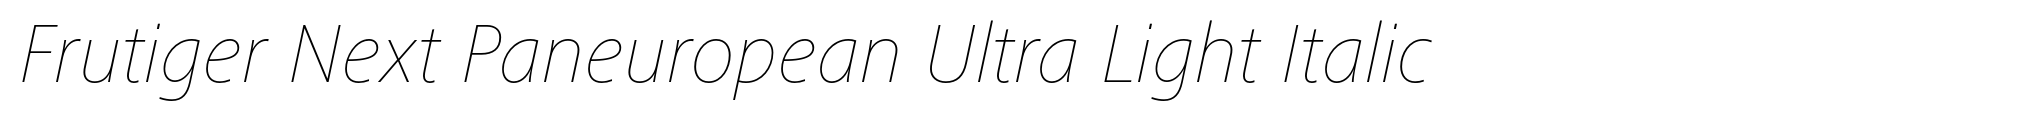 Frutiger Next Paneuropean Ultra Light Italic image